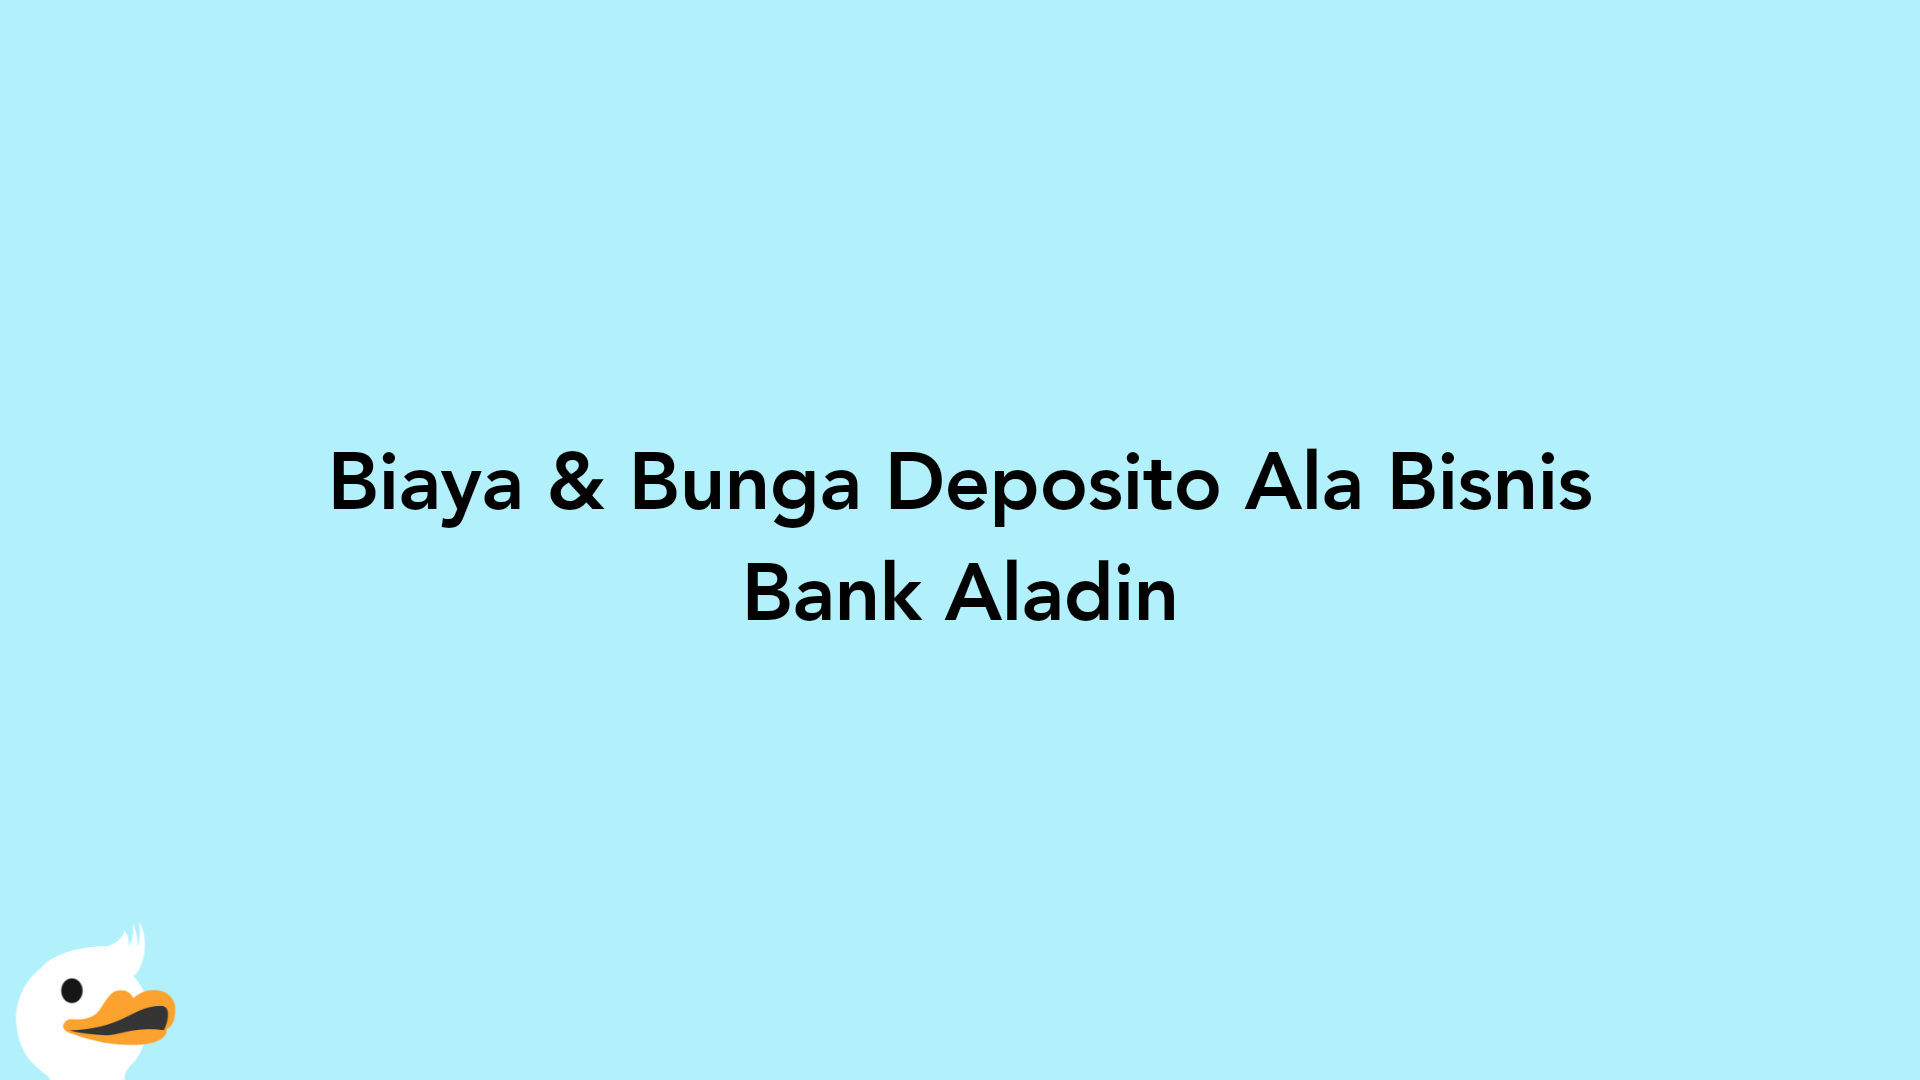 Biaya & Bunga Deposito Ala Bisnis Bank Aladin